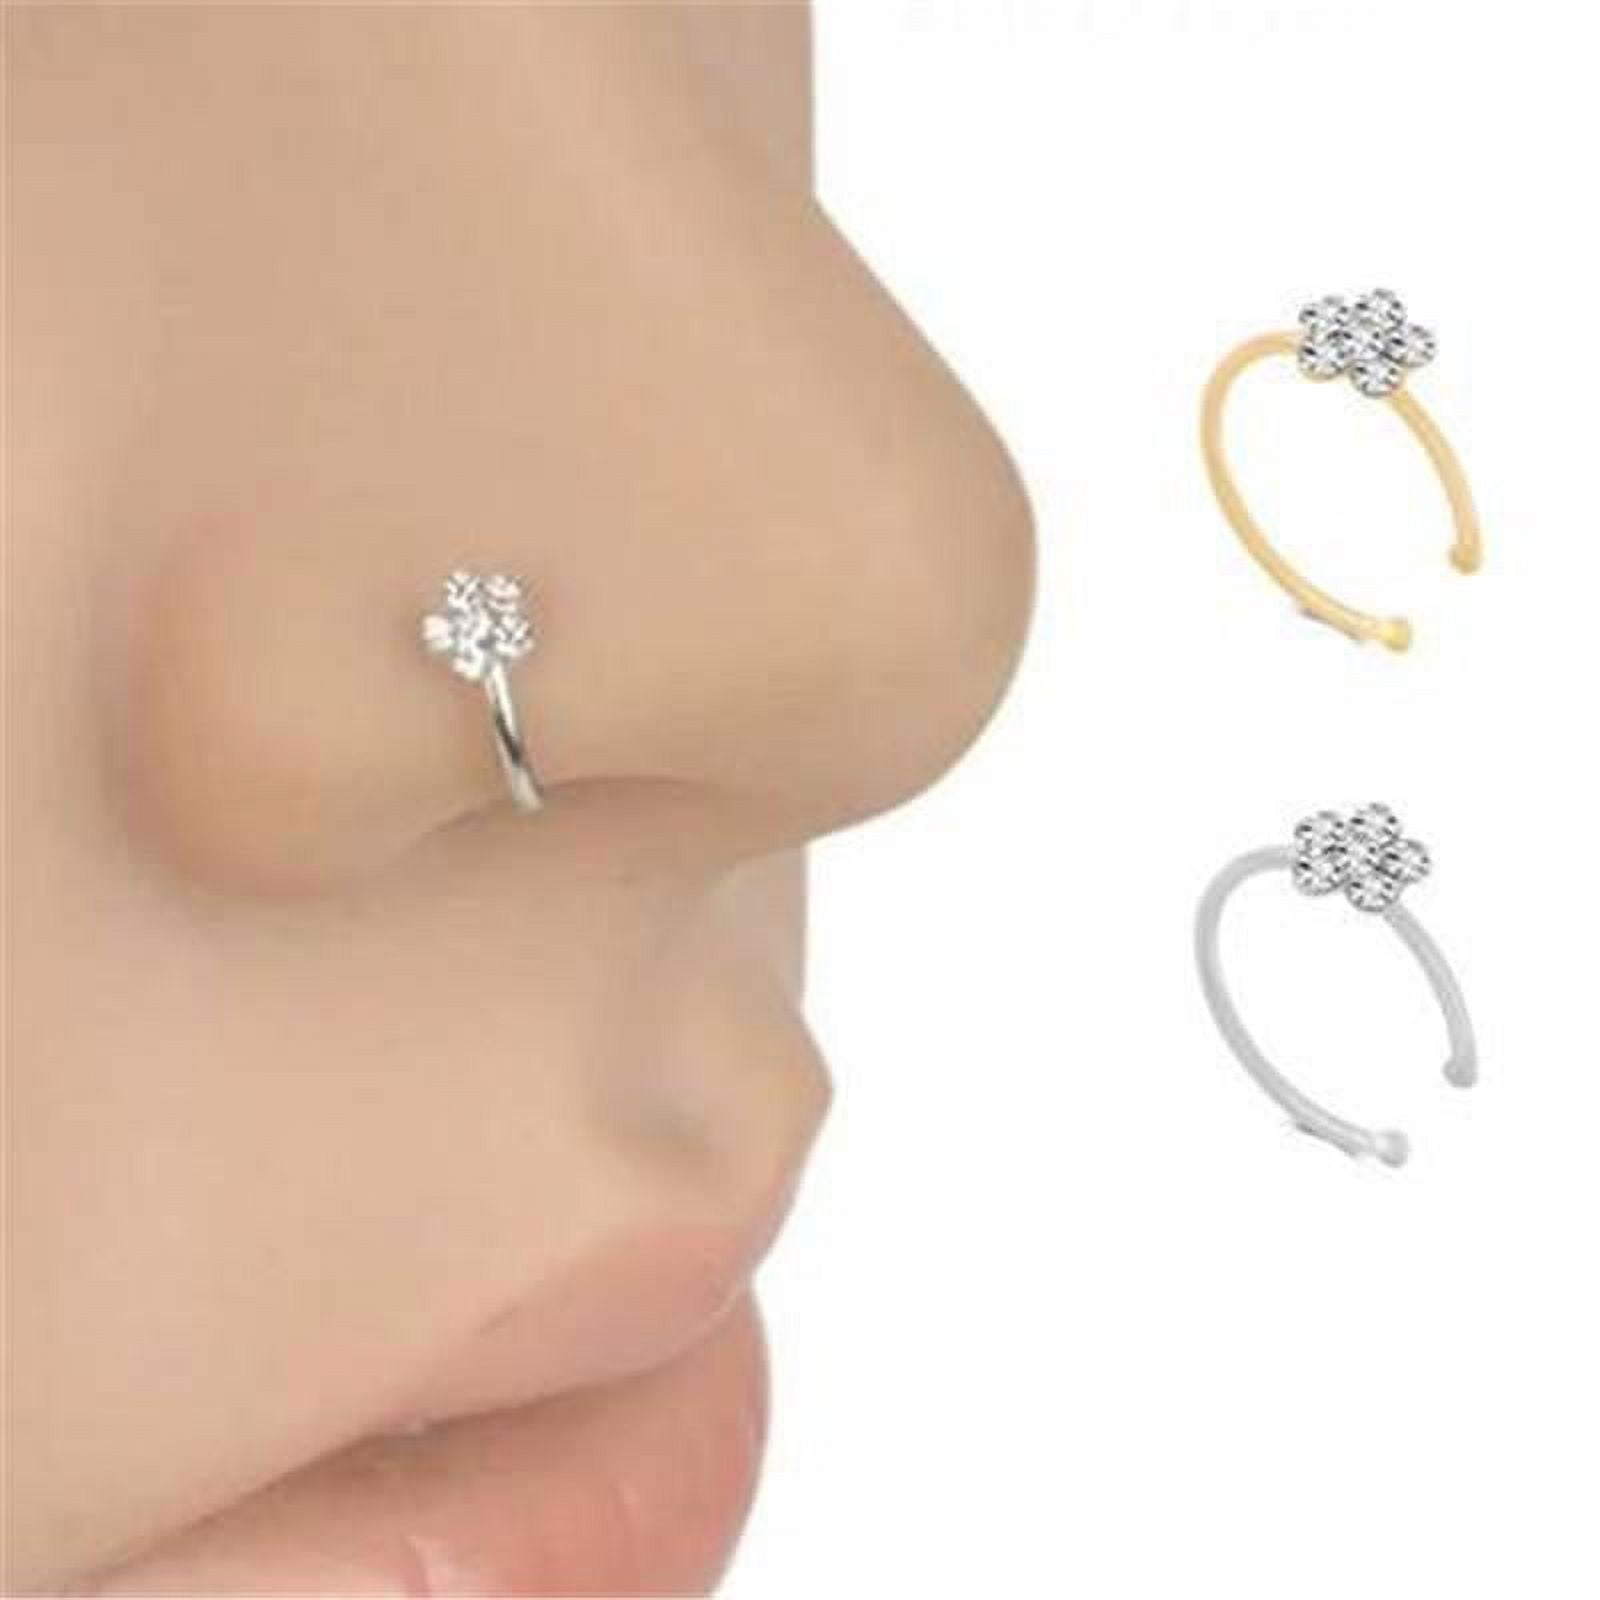 Latest Gold Nose Pin Designs With Price 2022 @saijewellerssj16 - YouTube